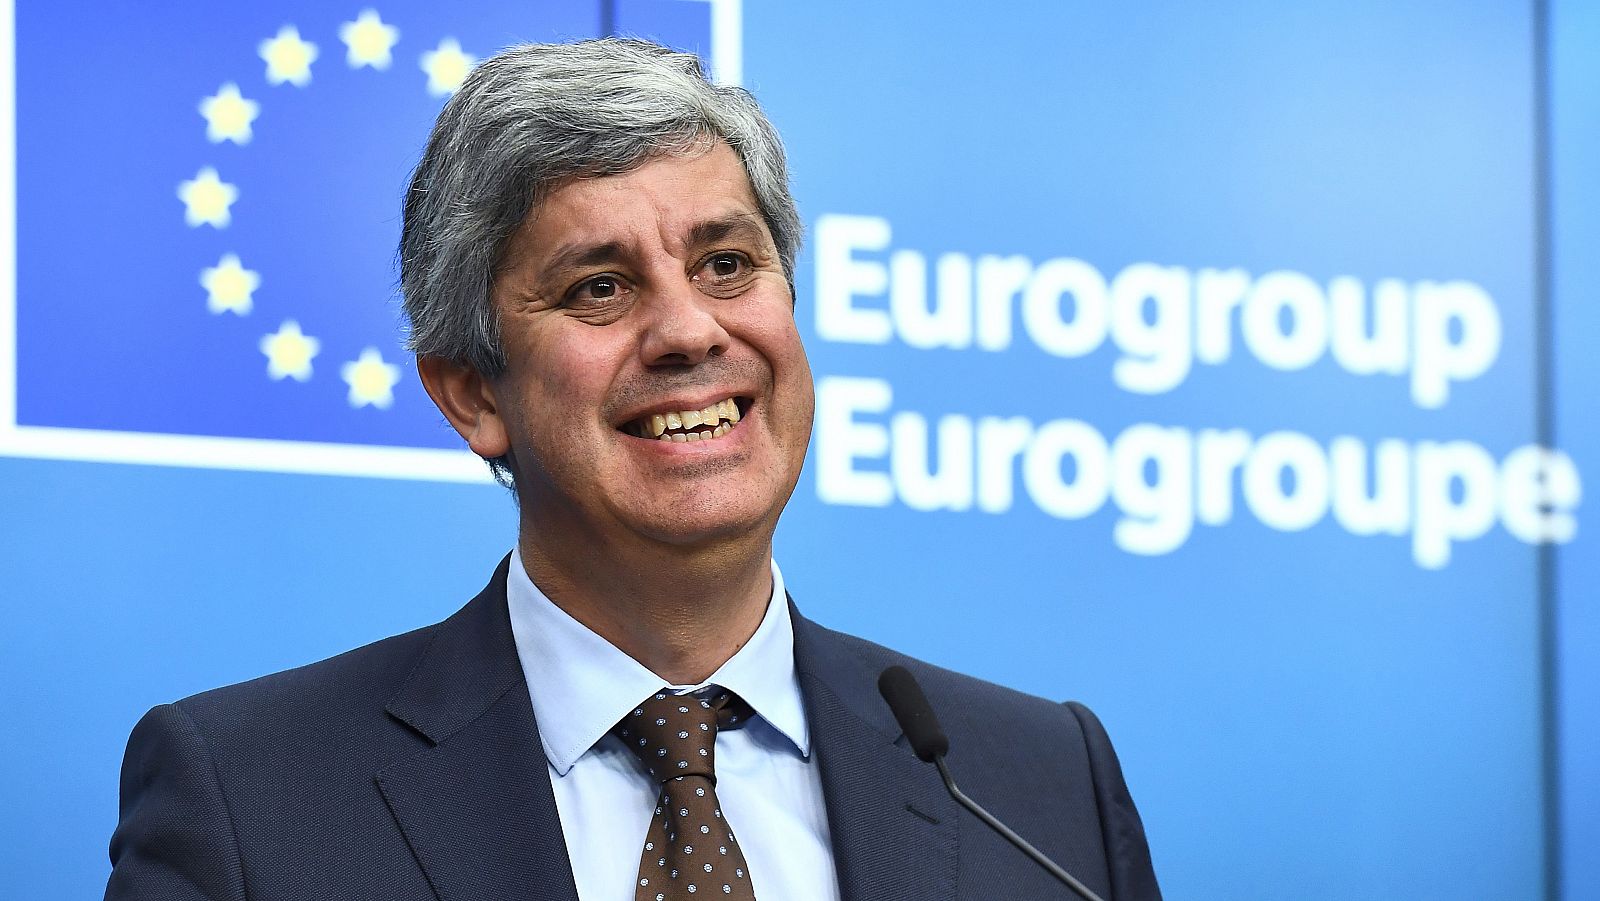  Europa abierta - Mario centeno: la vía portuguesa llega al Eurogrupo - Escuchar ahora